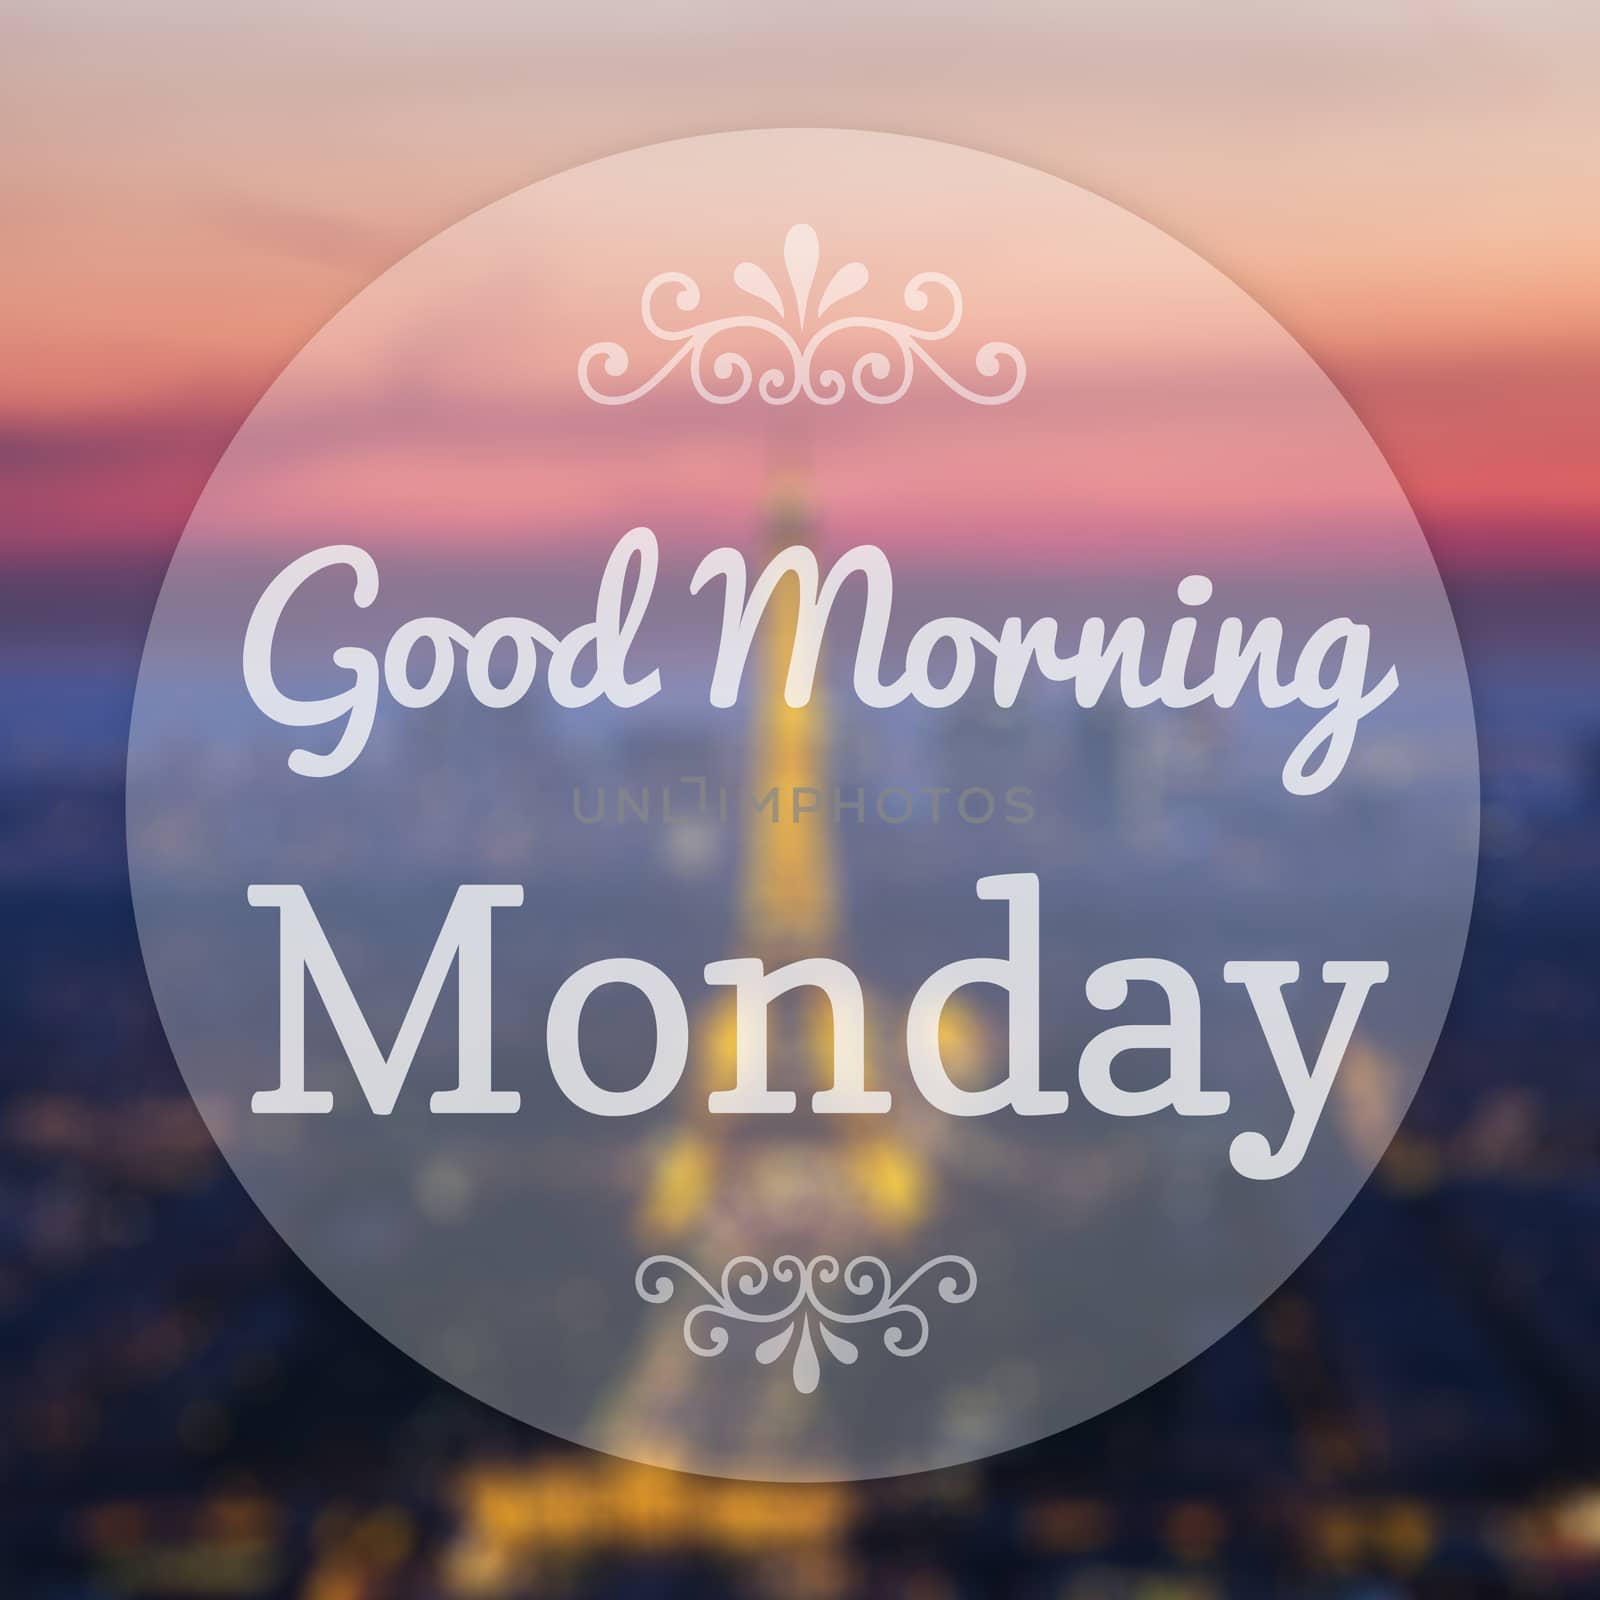 Good Morning Monday on Eiffle Paris blur background by 2nix